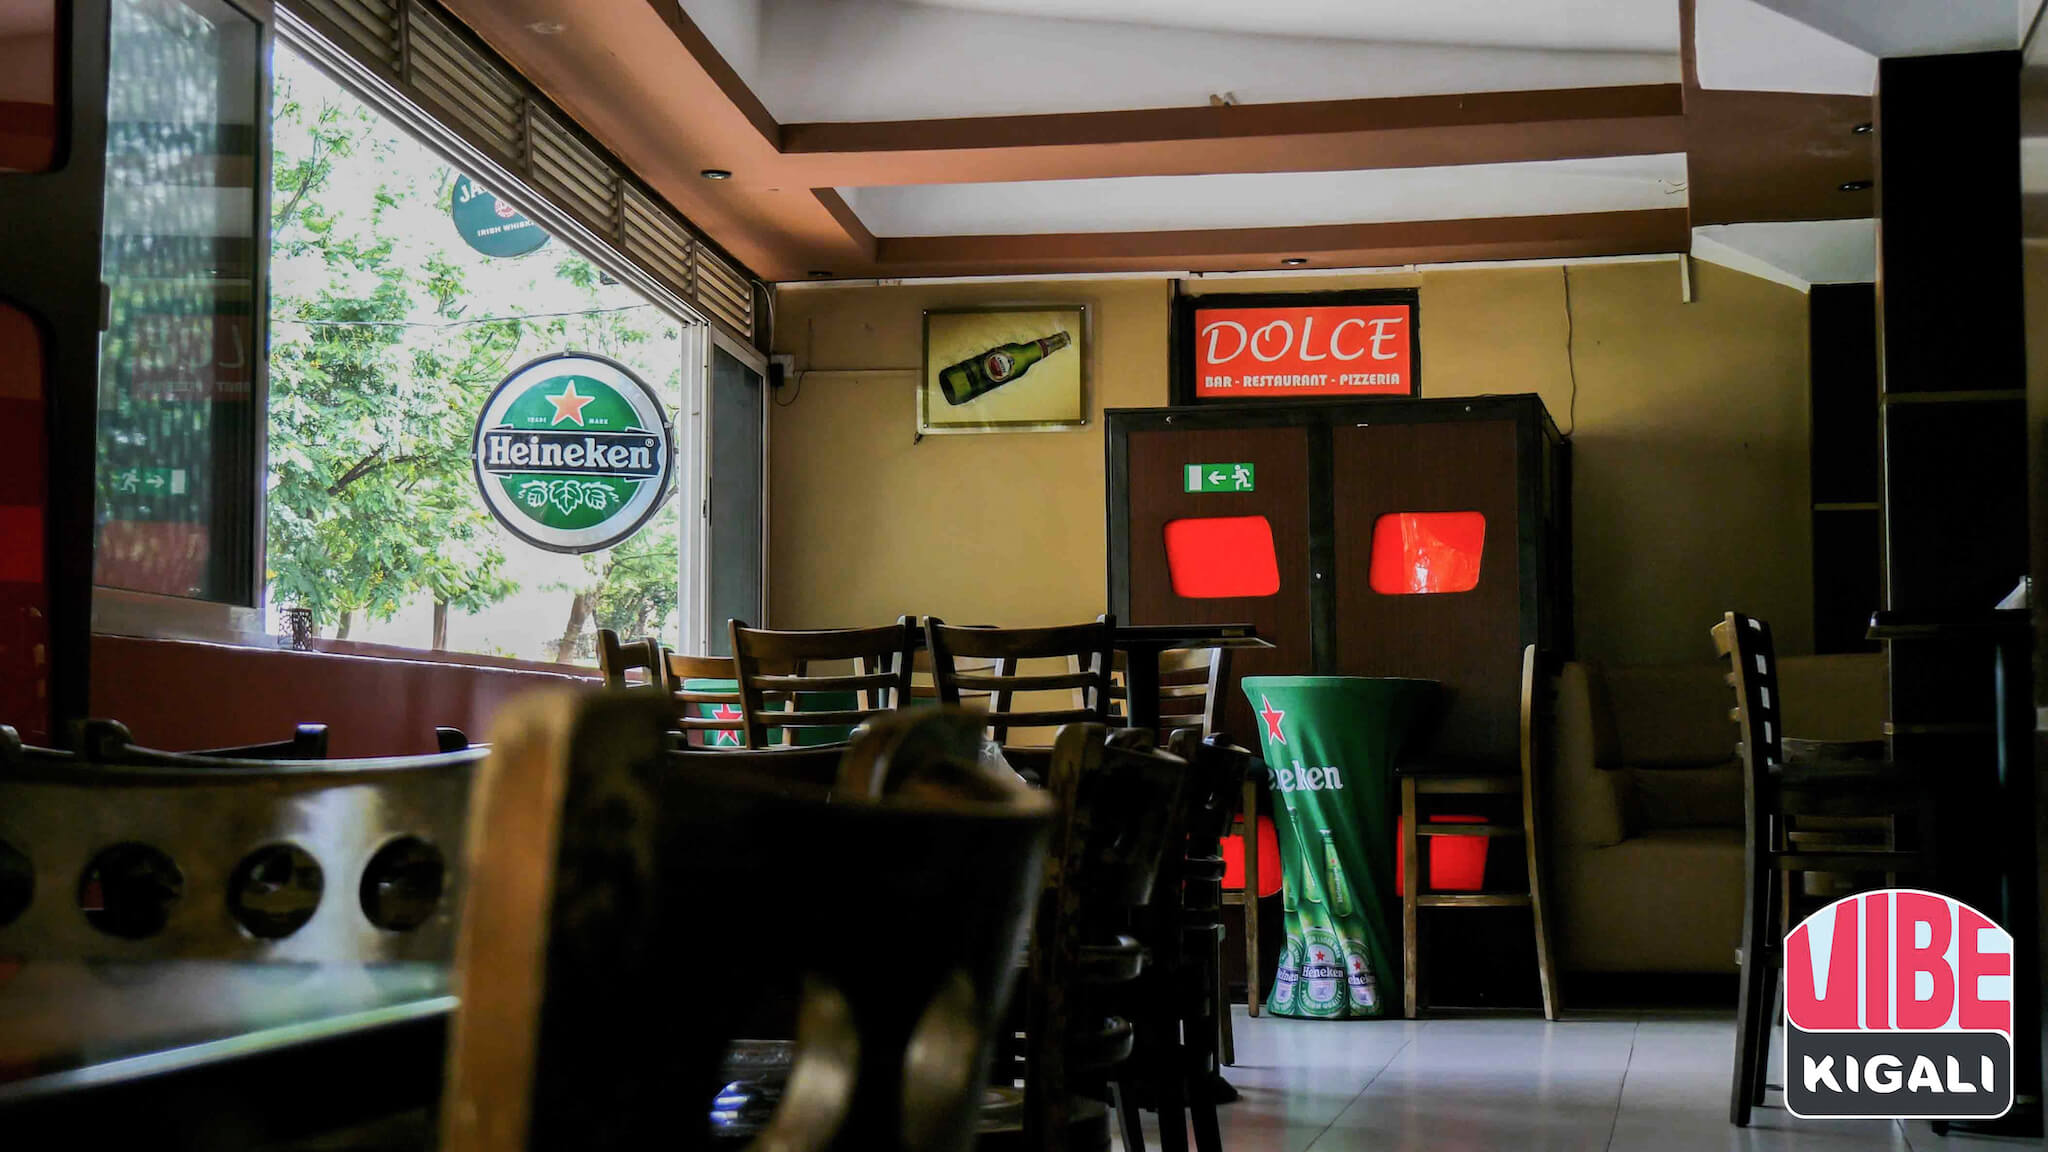 Dolce Bar & Restaurant Pizzeria